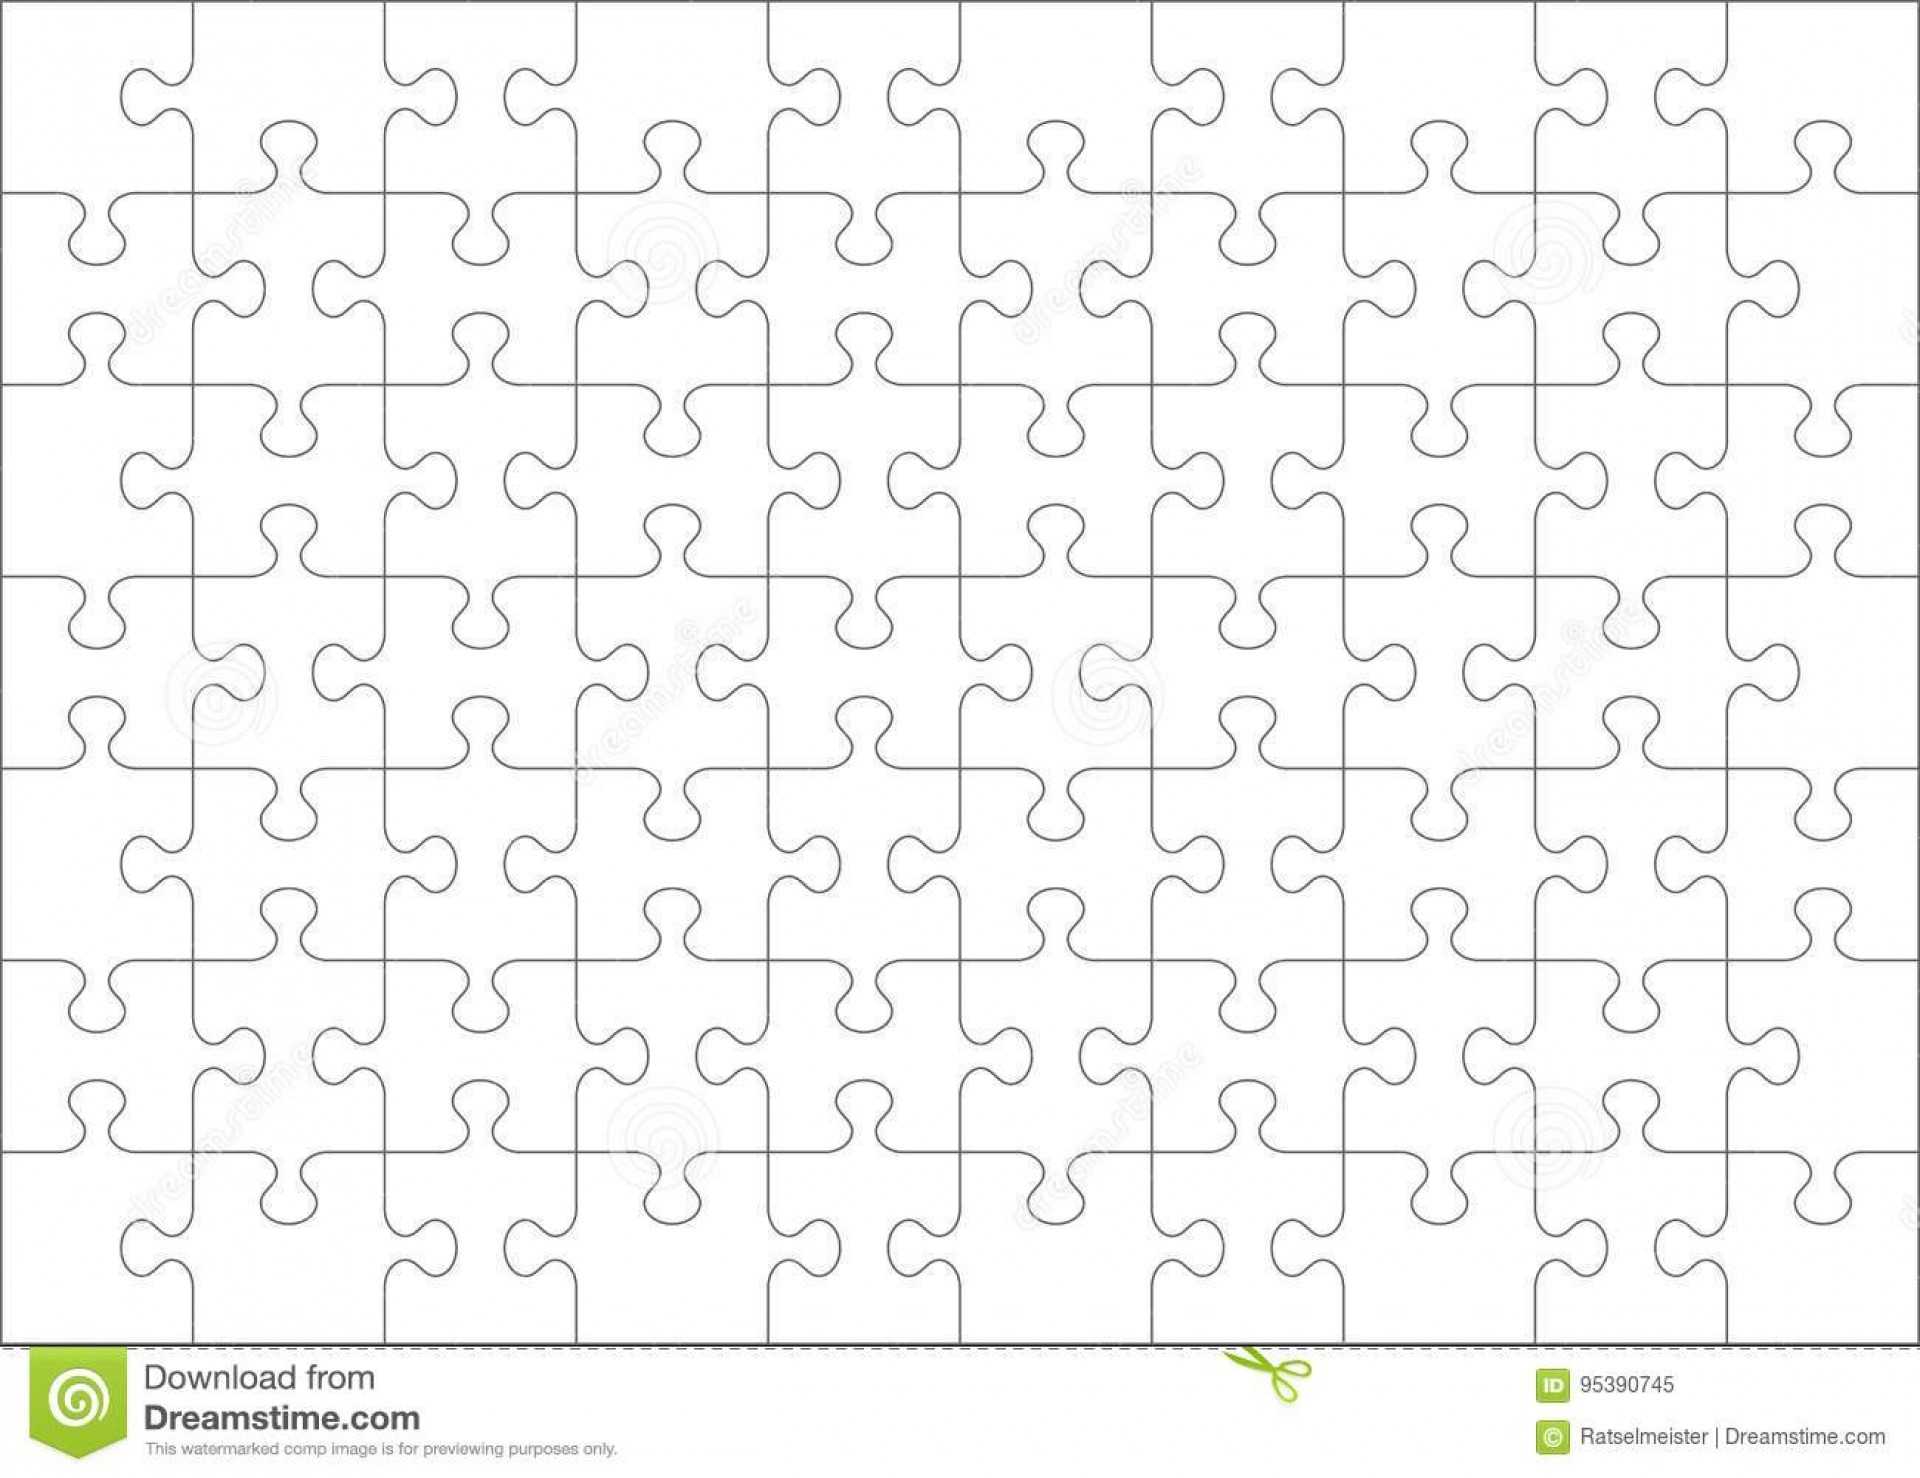 009 Depositphotos 78862402 Stock Illustration Jigsaw Puzzle In Blank Pattern Block Templates